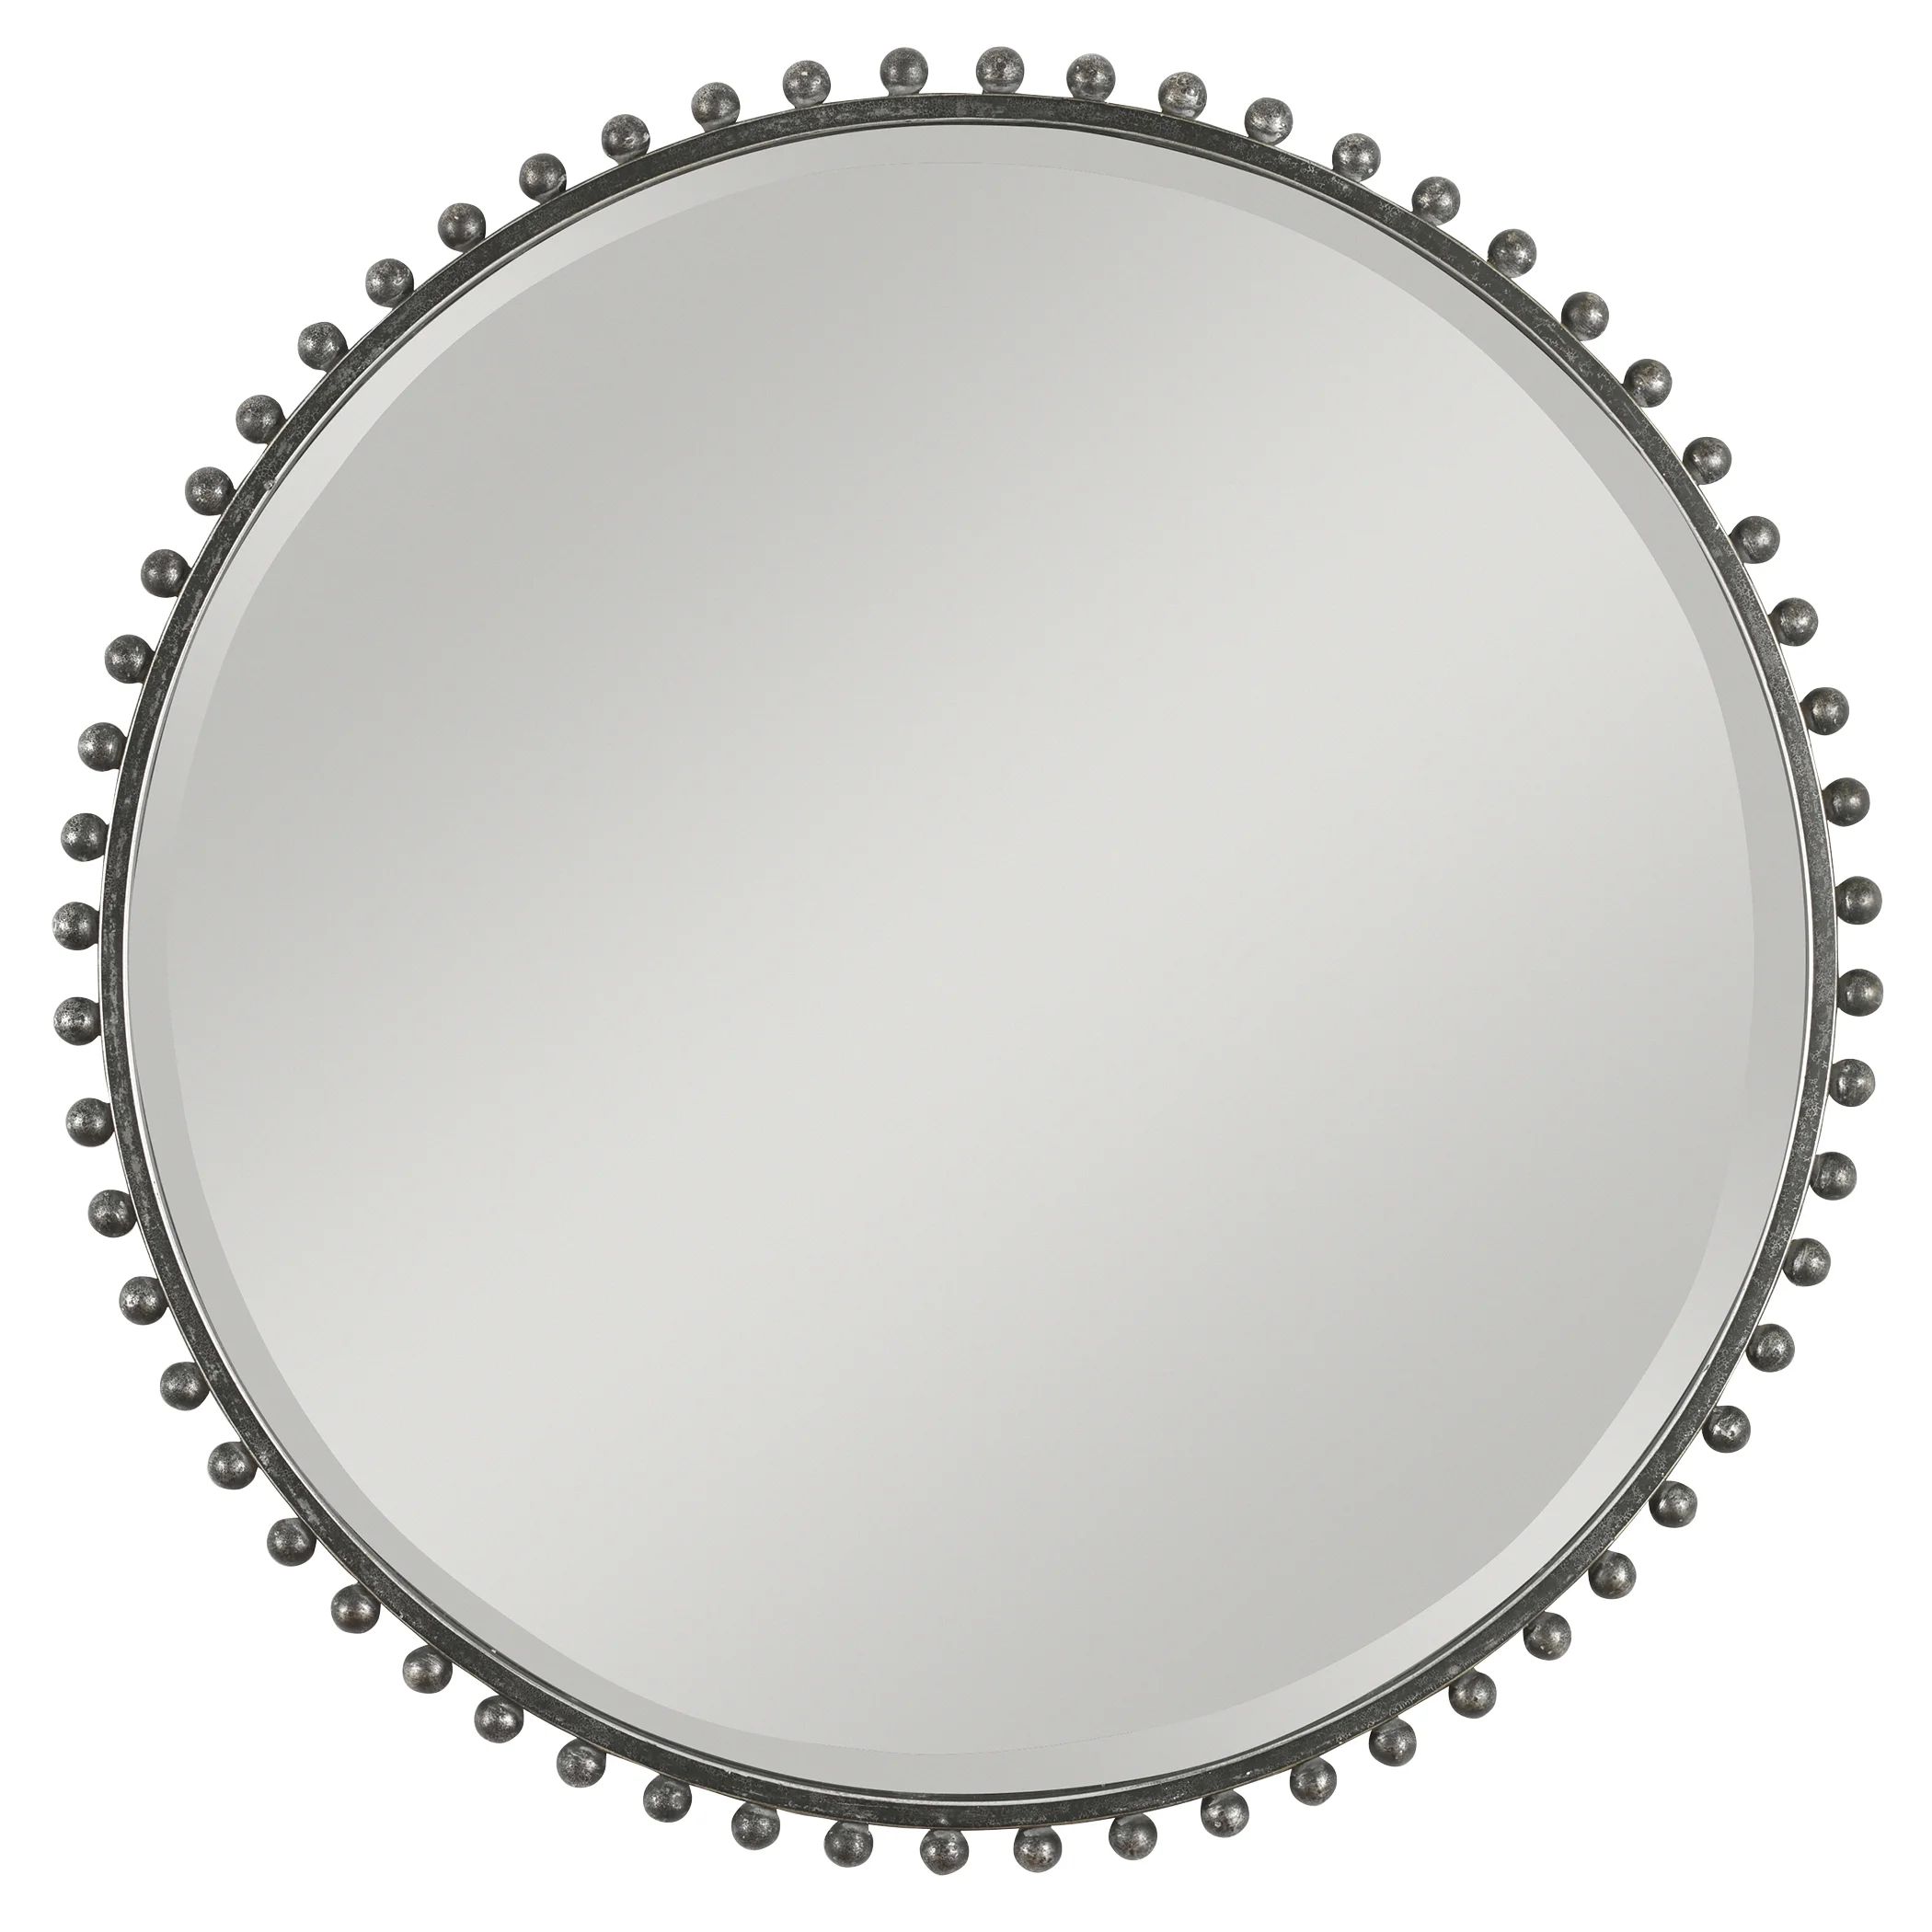 Samson Round Metal Wall Mirror | Wayfair North America